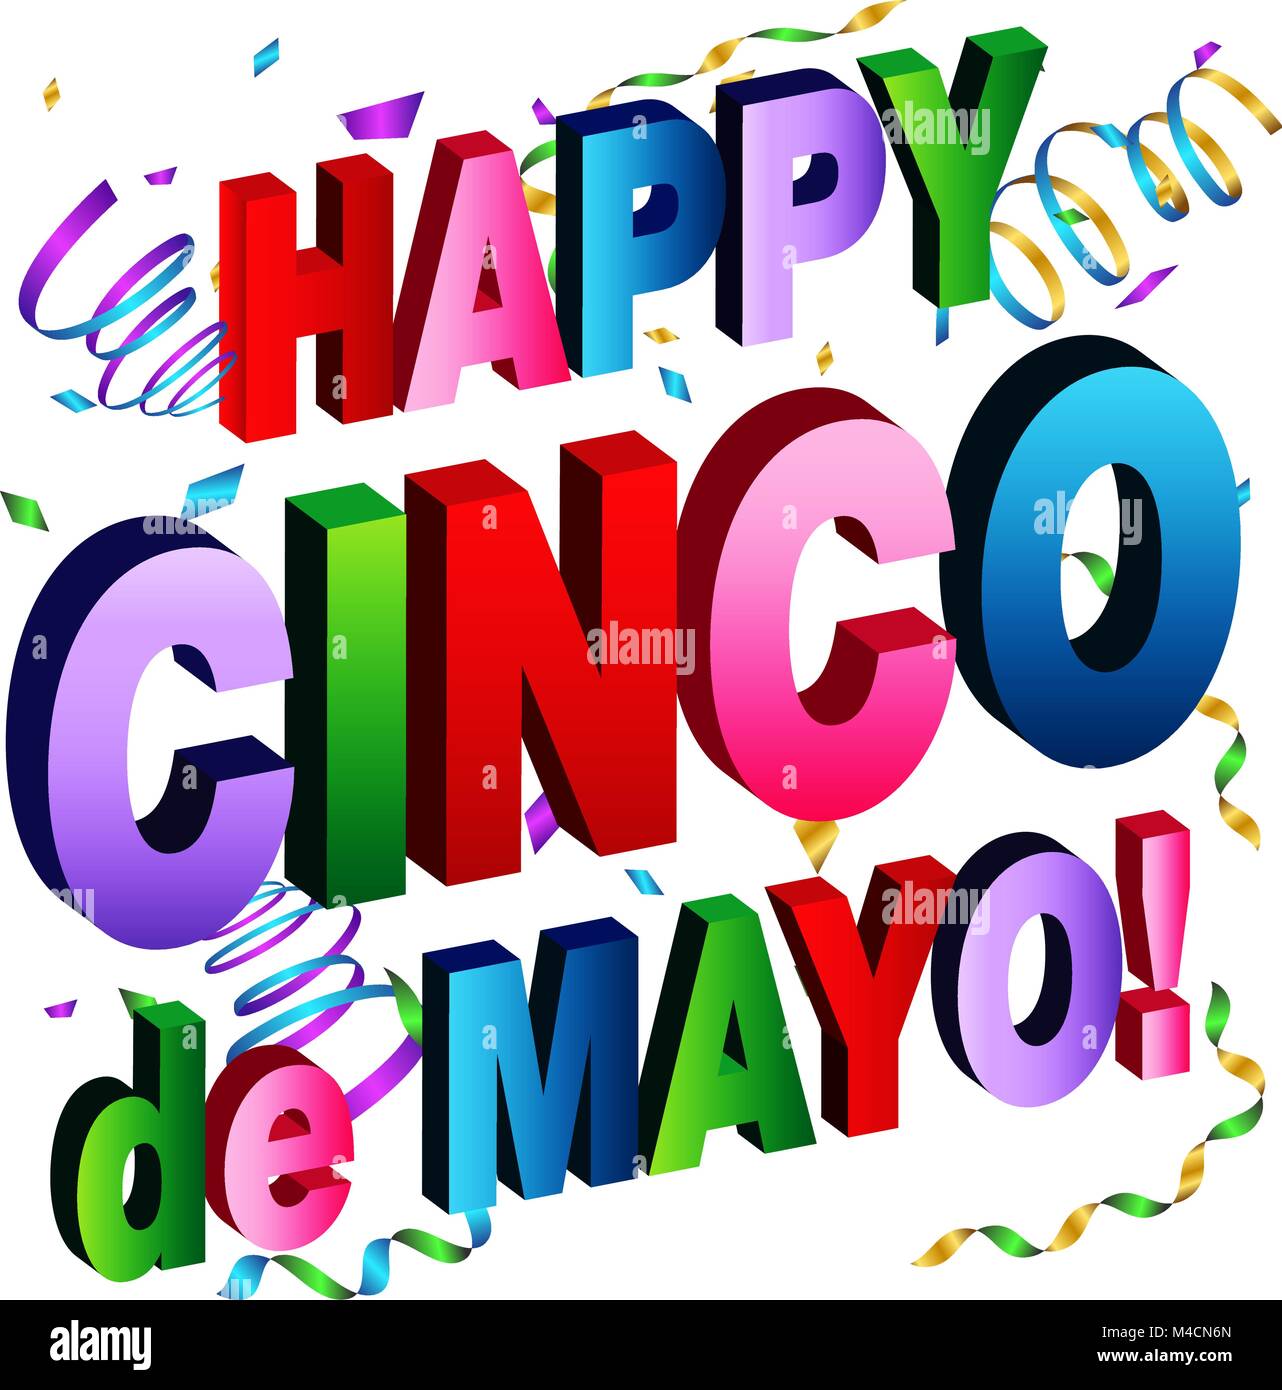 Chinco de Mayo Stock Vector Image & Art - Alamy